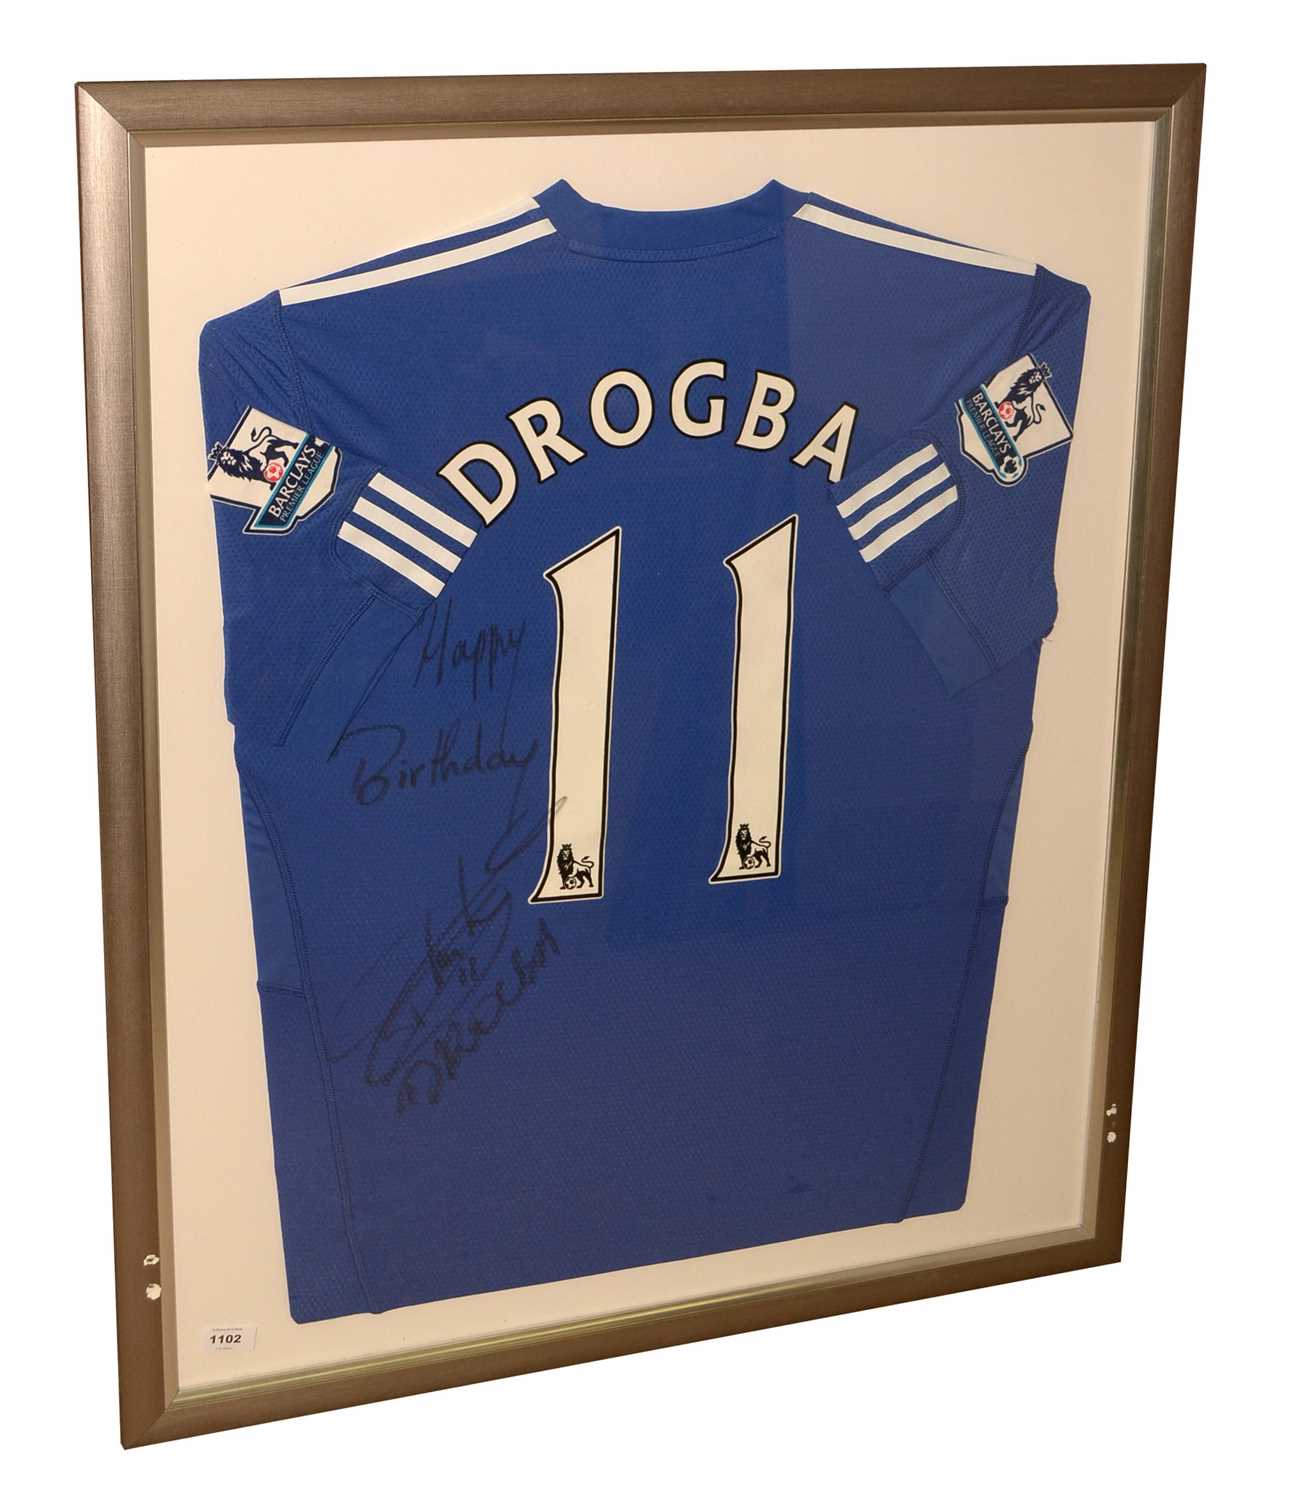 Lot 1232 - Signed Drogba football shirt.